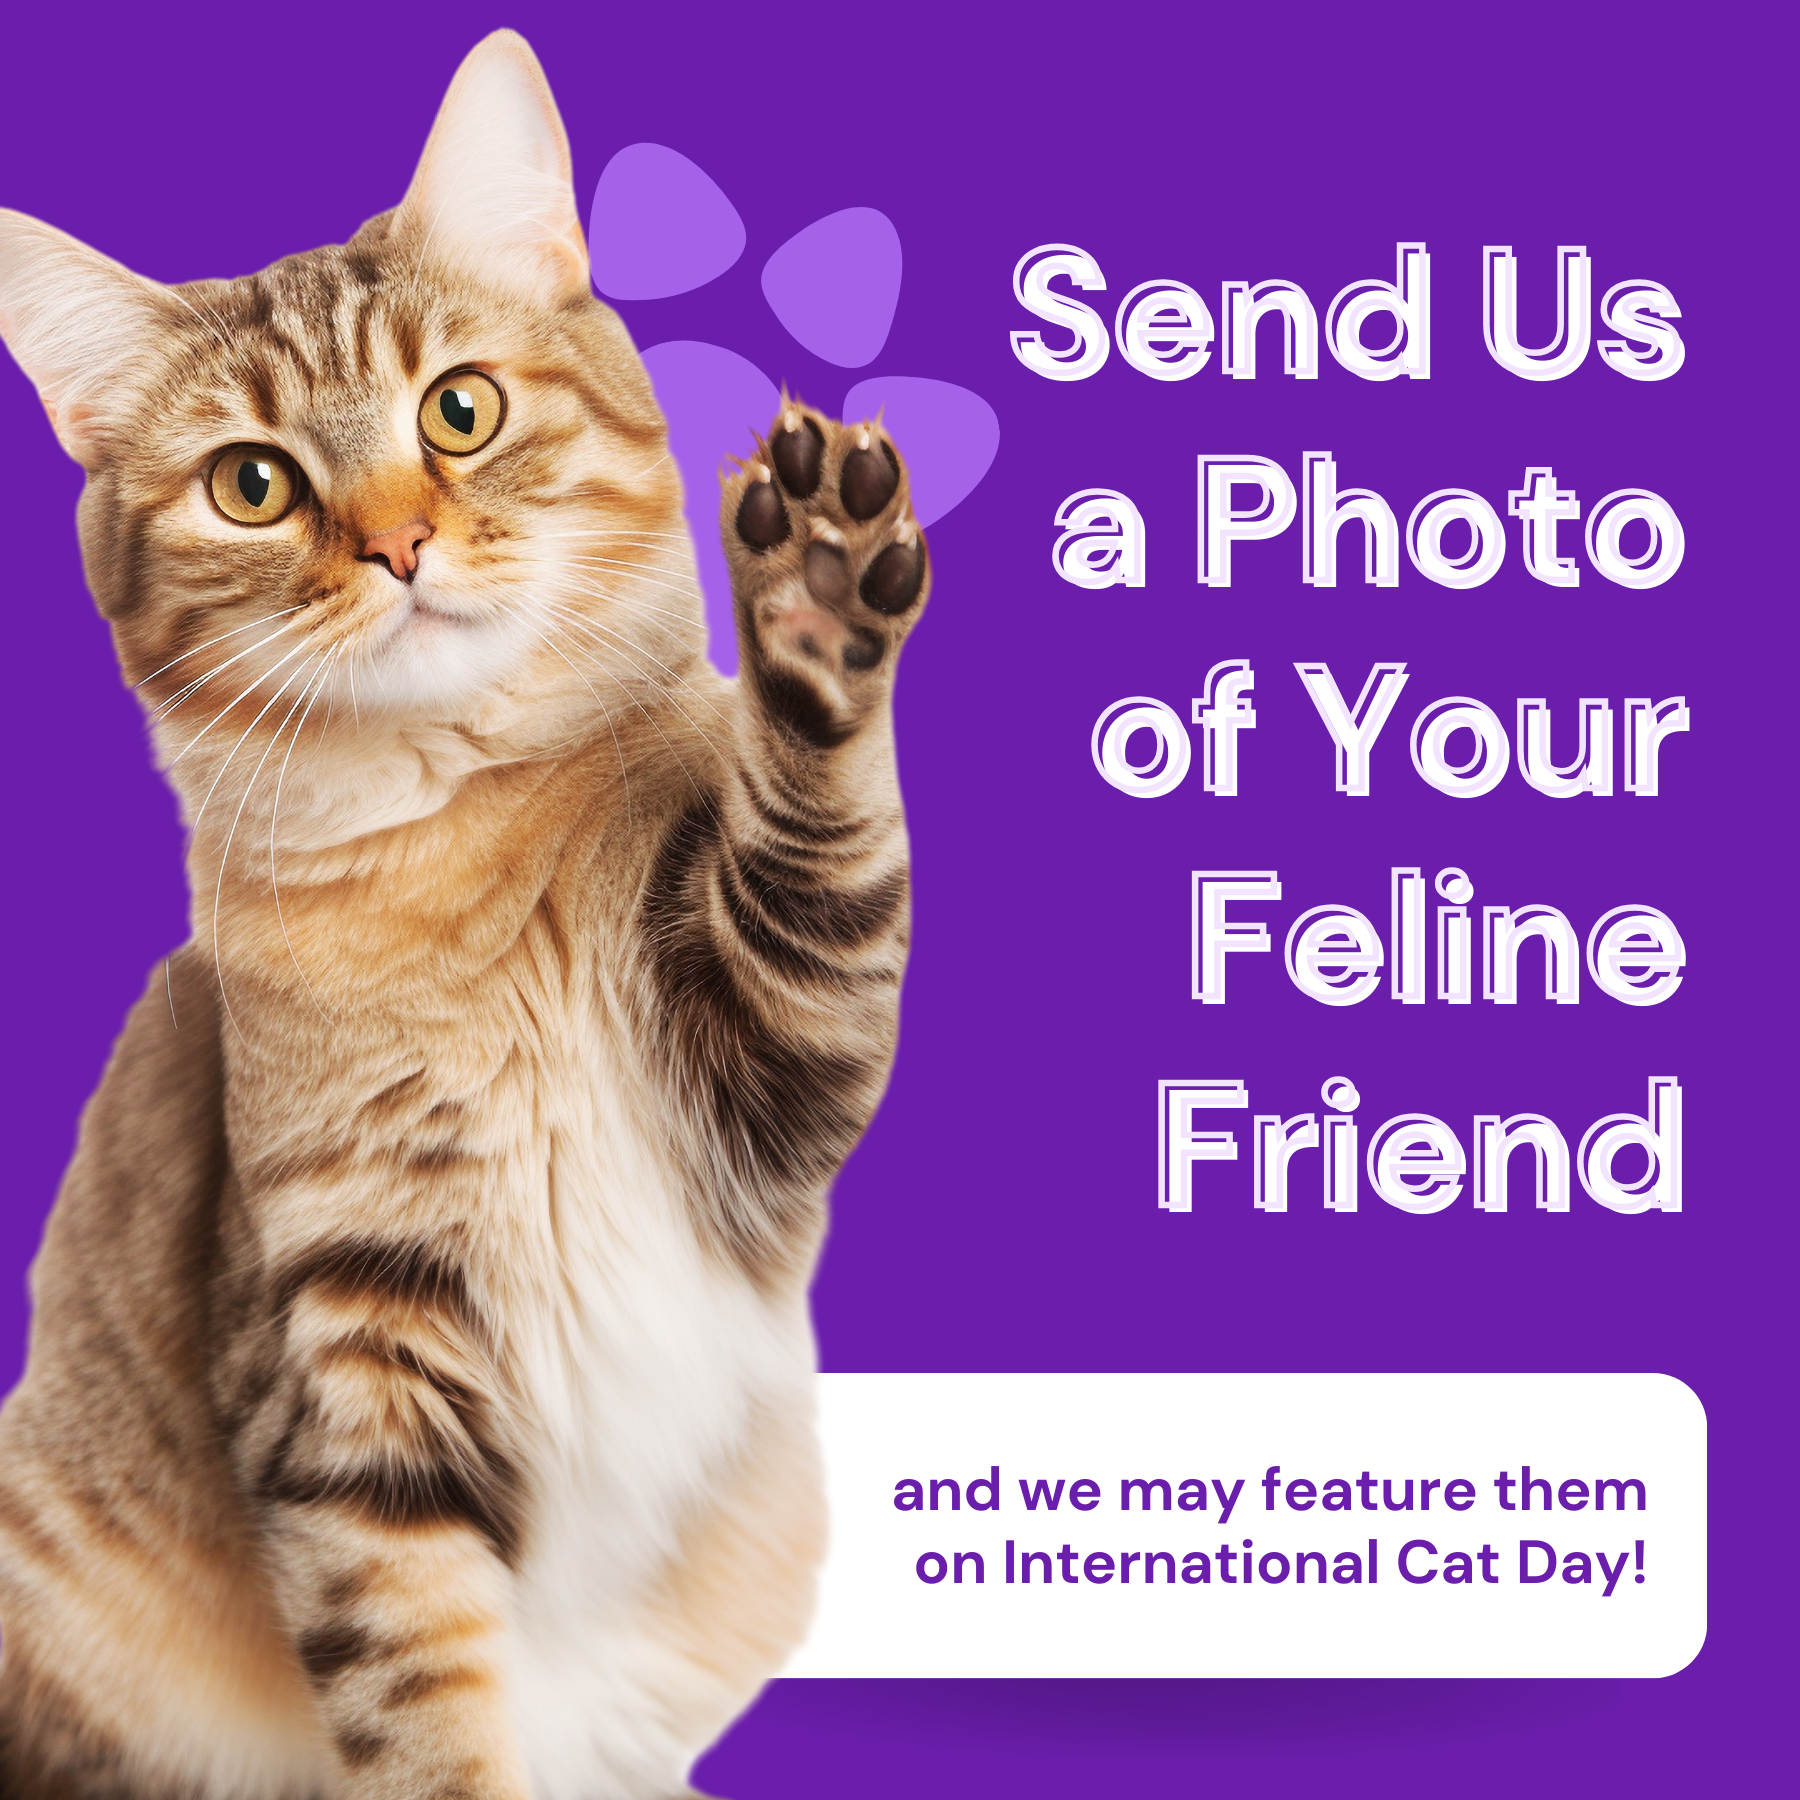 Send Us a Photo of Your Feline Friend